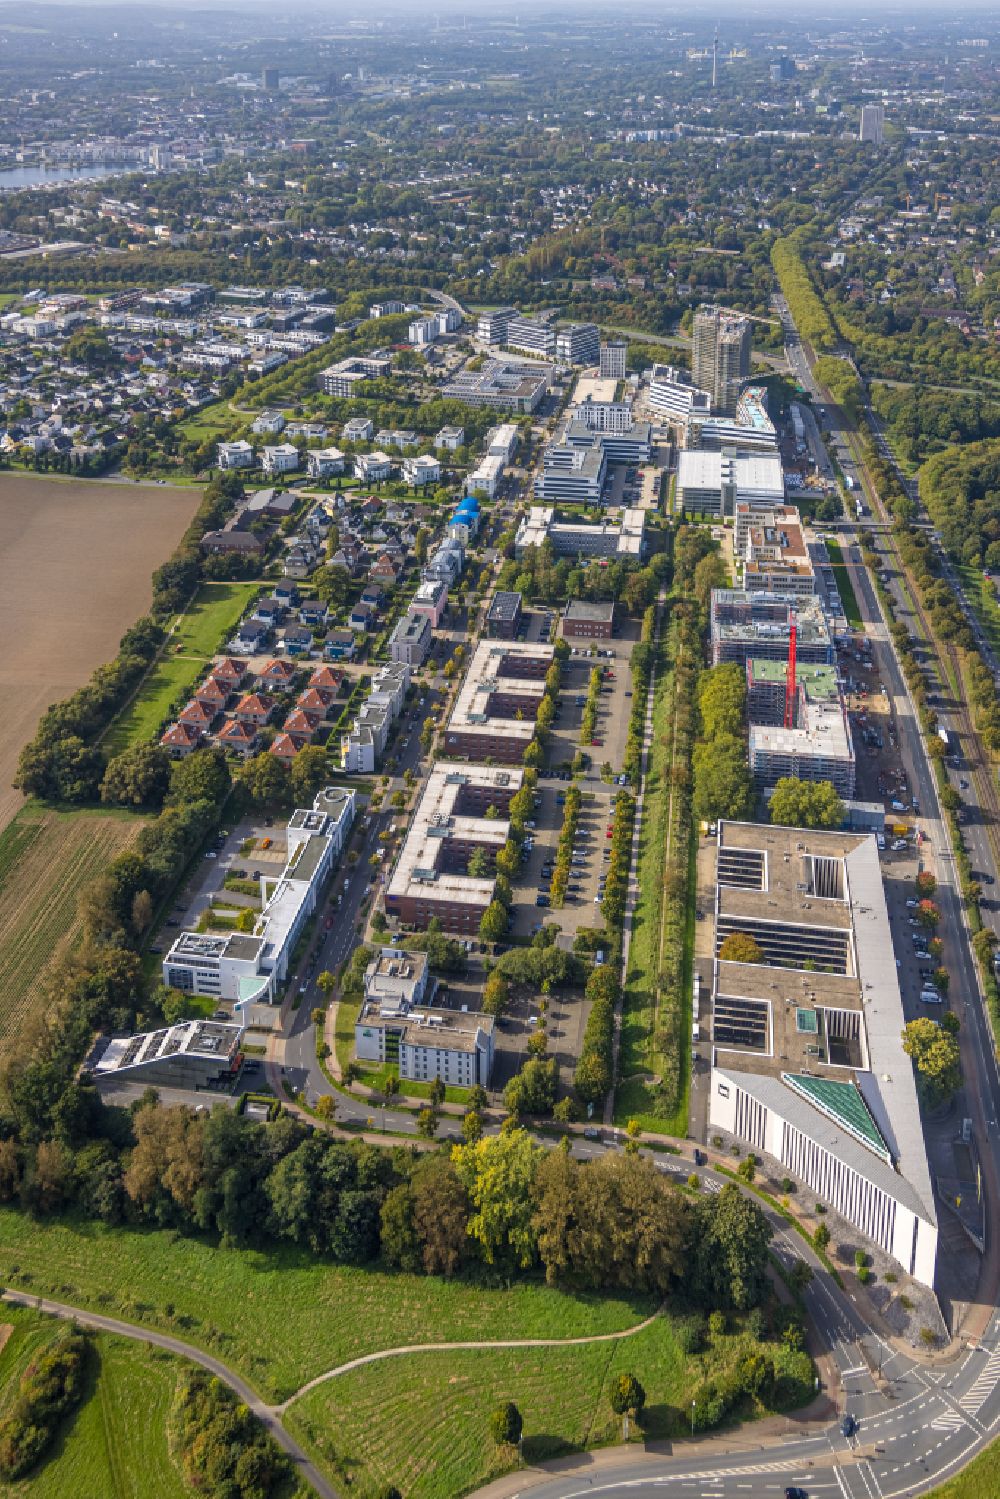 Aerial image Dortmund - Office building - Ensemble in the industrial area along the Freie-Vogel-Strasse - Stockholmer Allee in the district Schueren-Neu in Dortmund in the state North Rhine-Westphalia, Germany